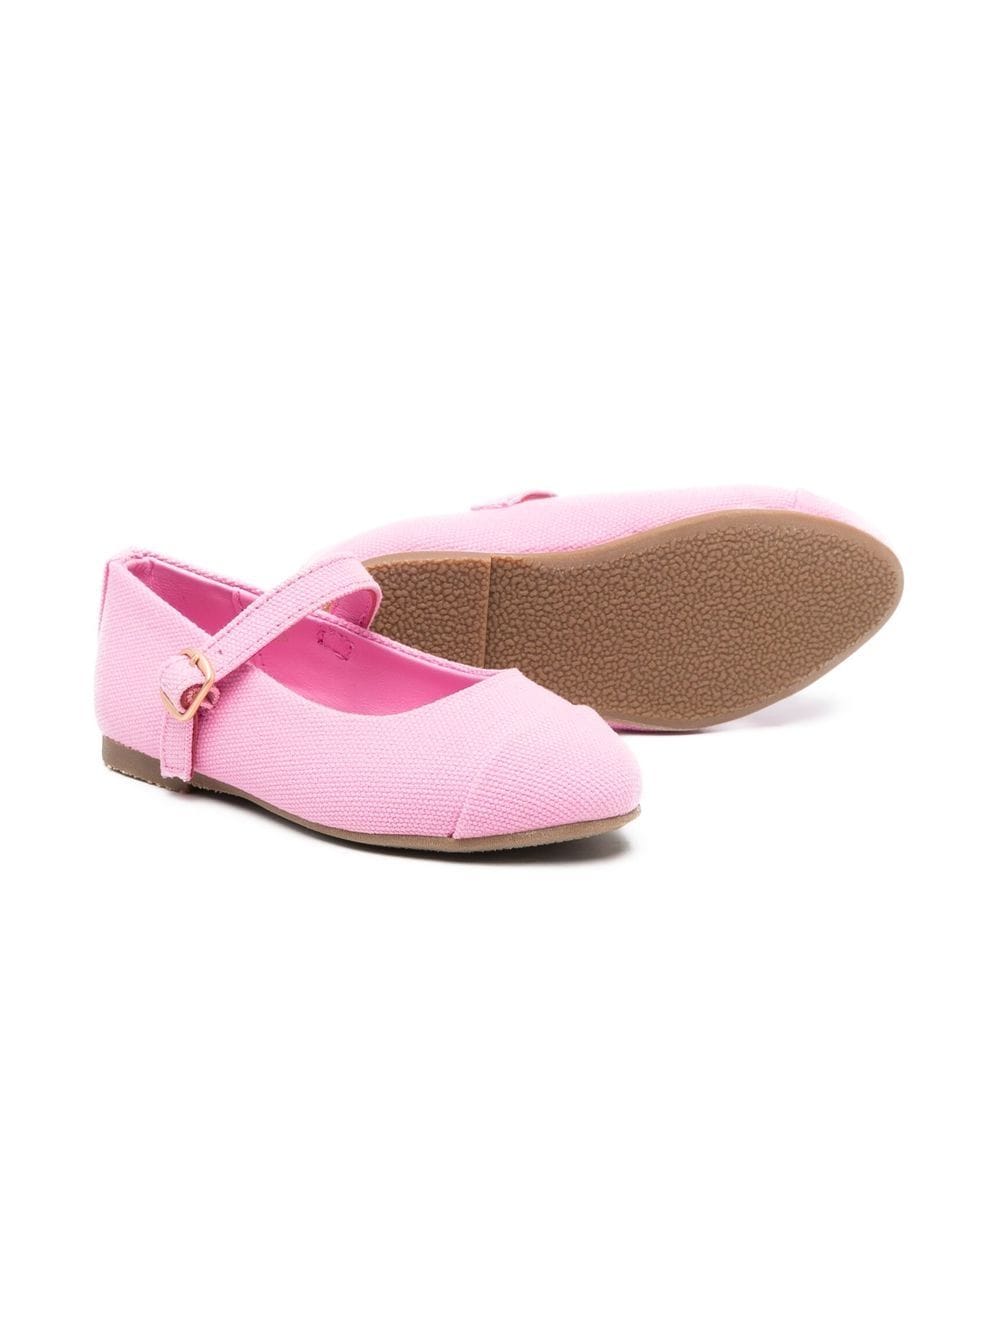 age of innocence bebe side buckle-fastening ballerina shoes - pink